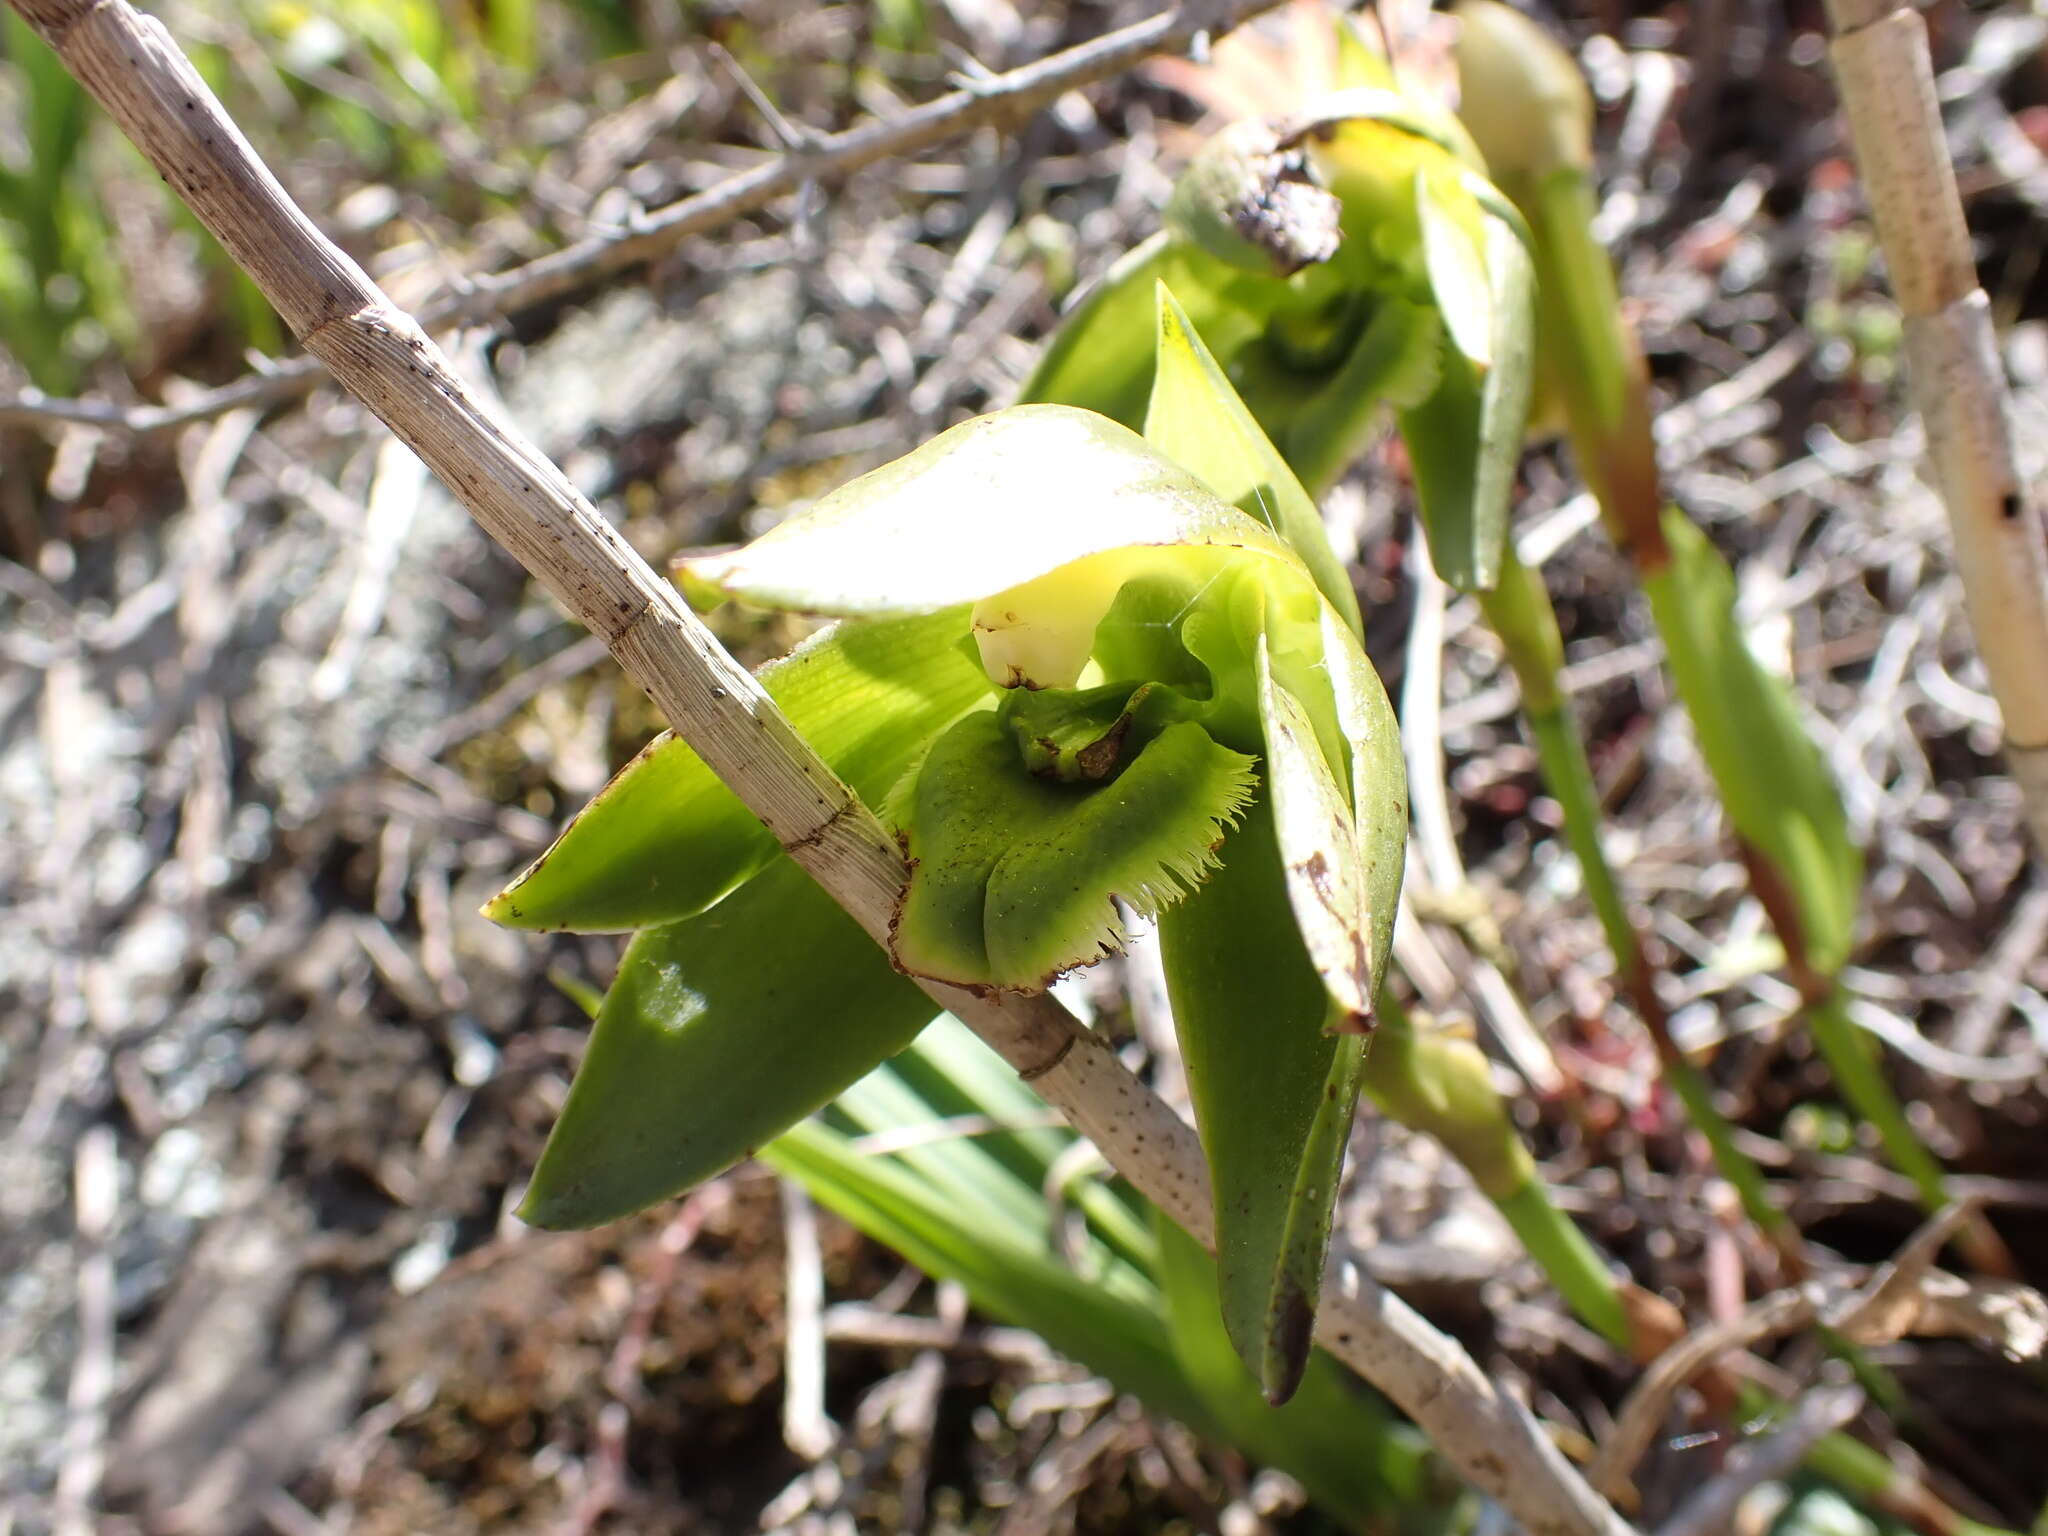 Image of Sudamerlycaste locusta (Rchb. fil.) Archila